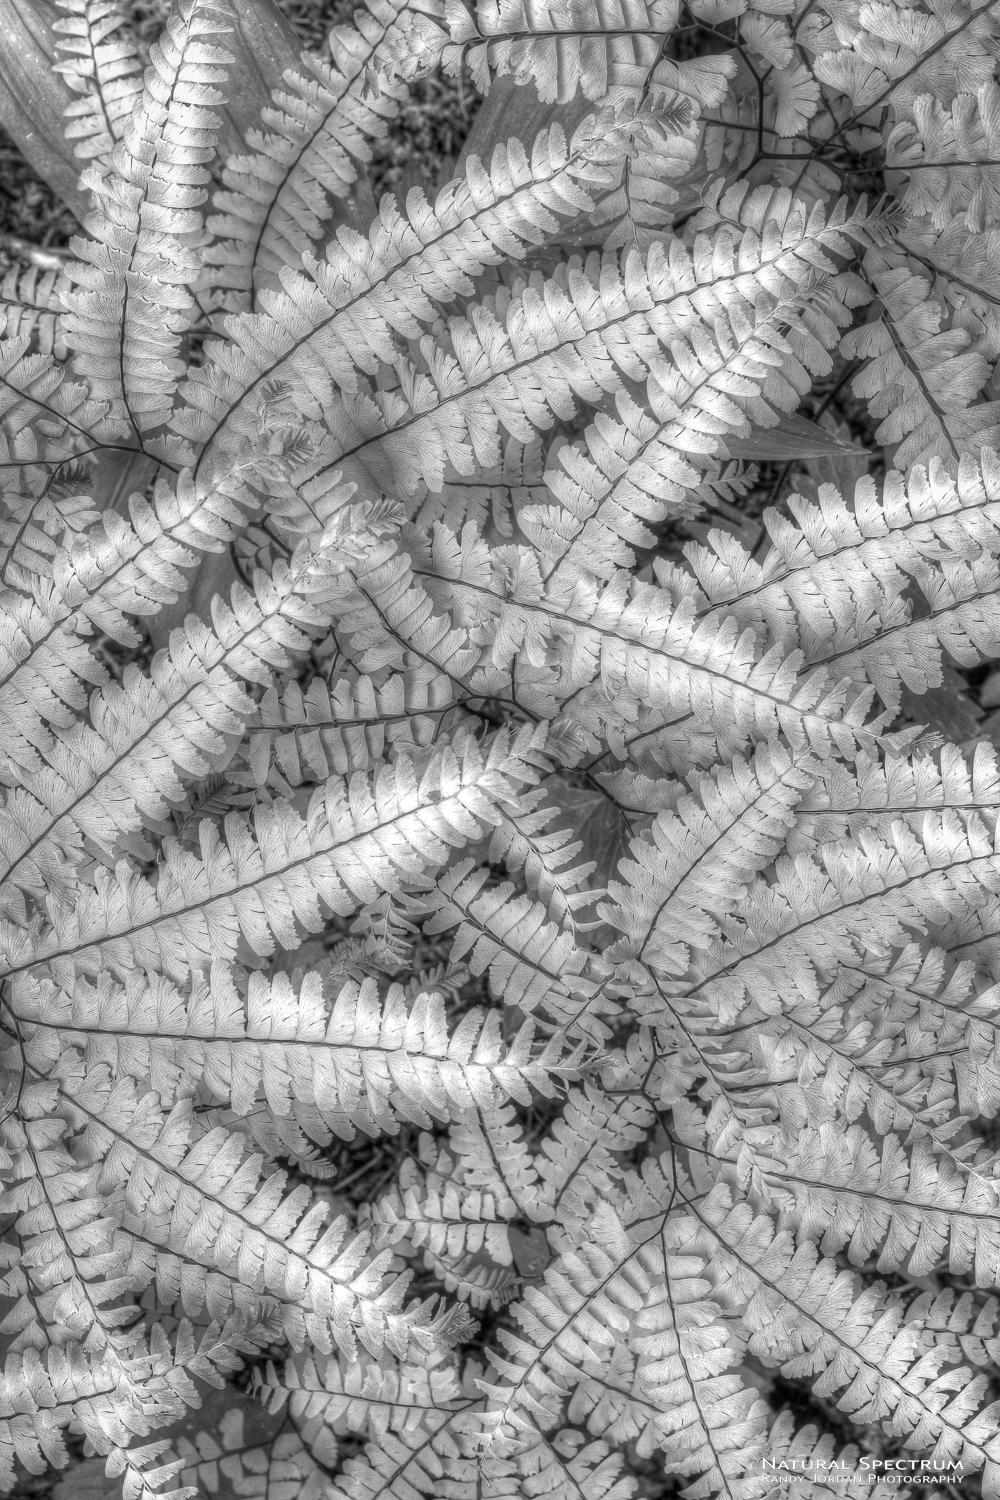 A carpet of Maidenhair Ferns, in monochrome expression.